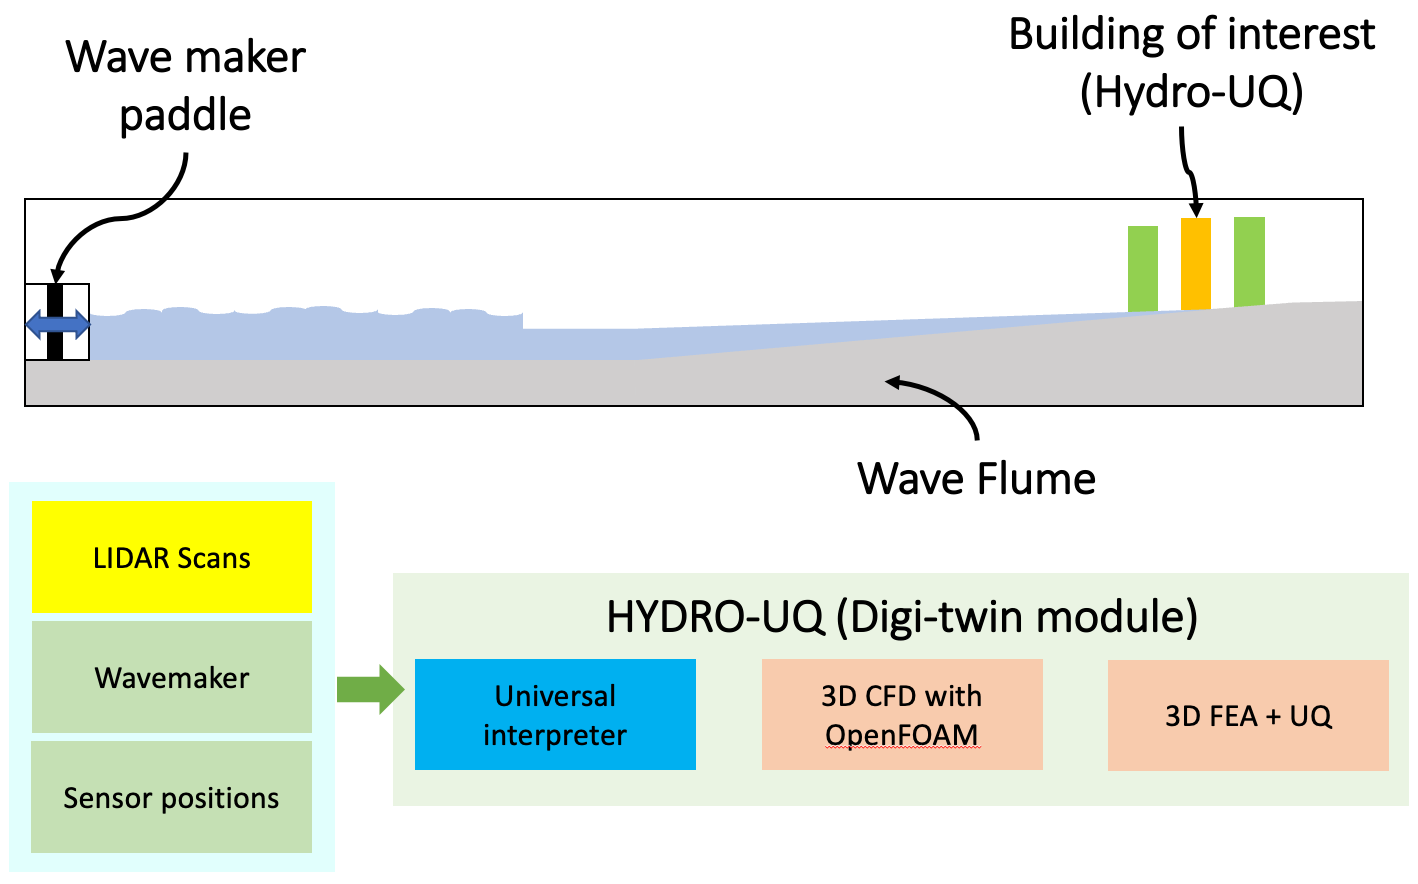 Hydro-UQ wave flume